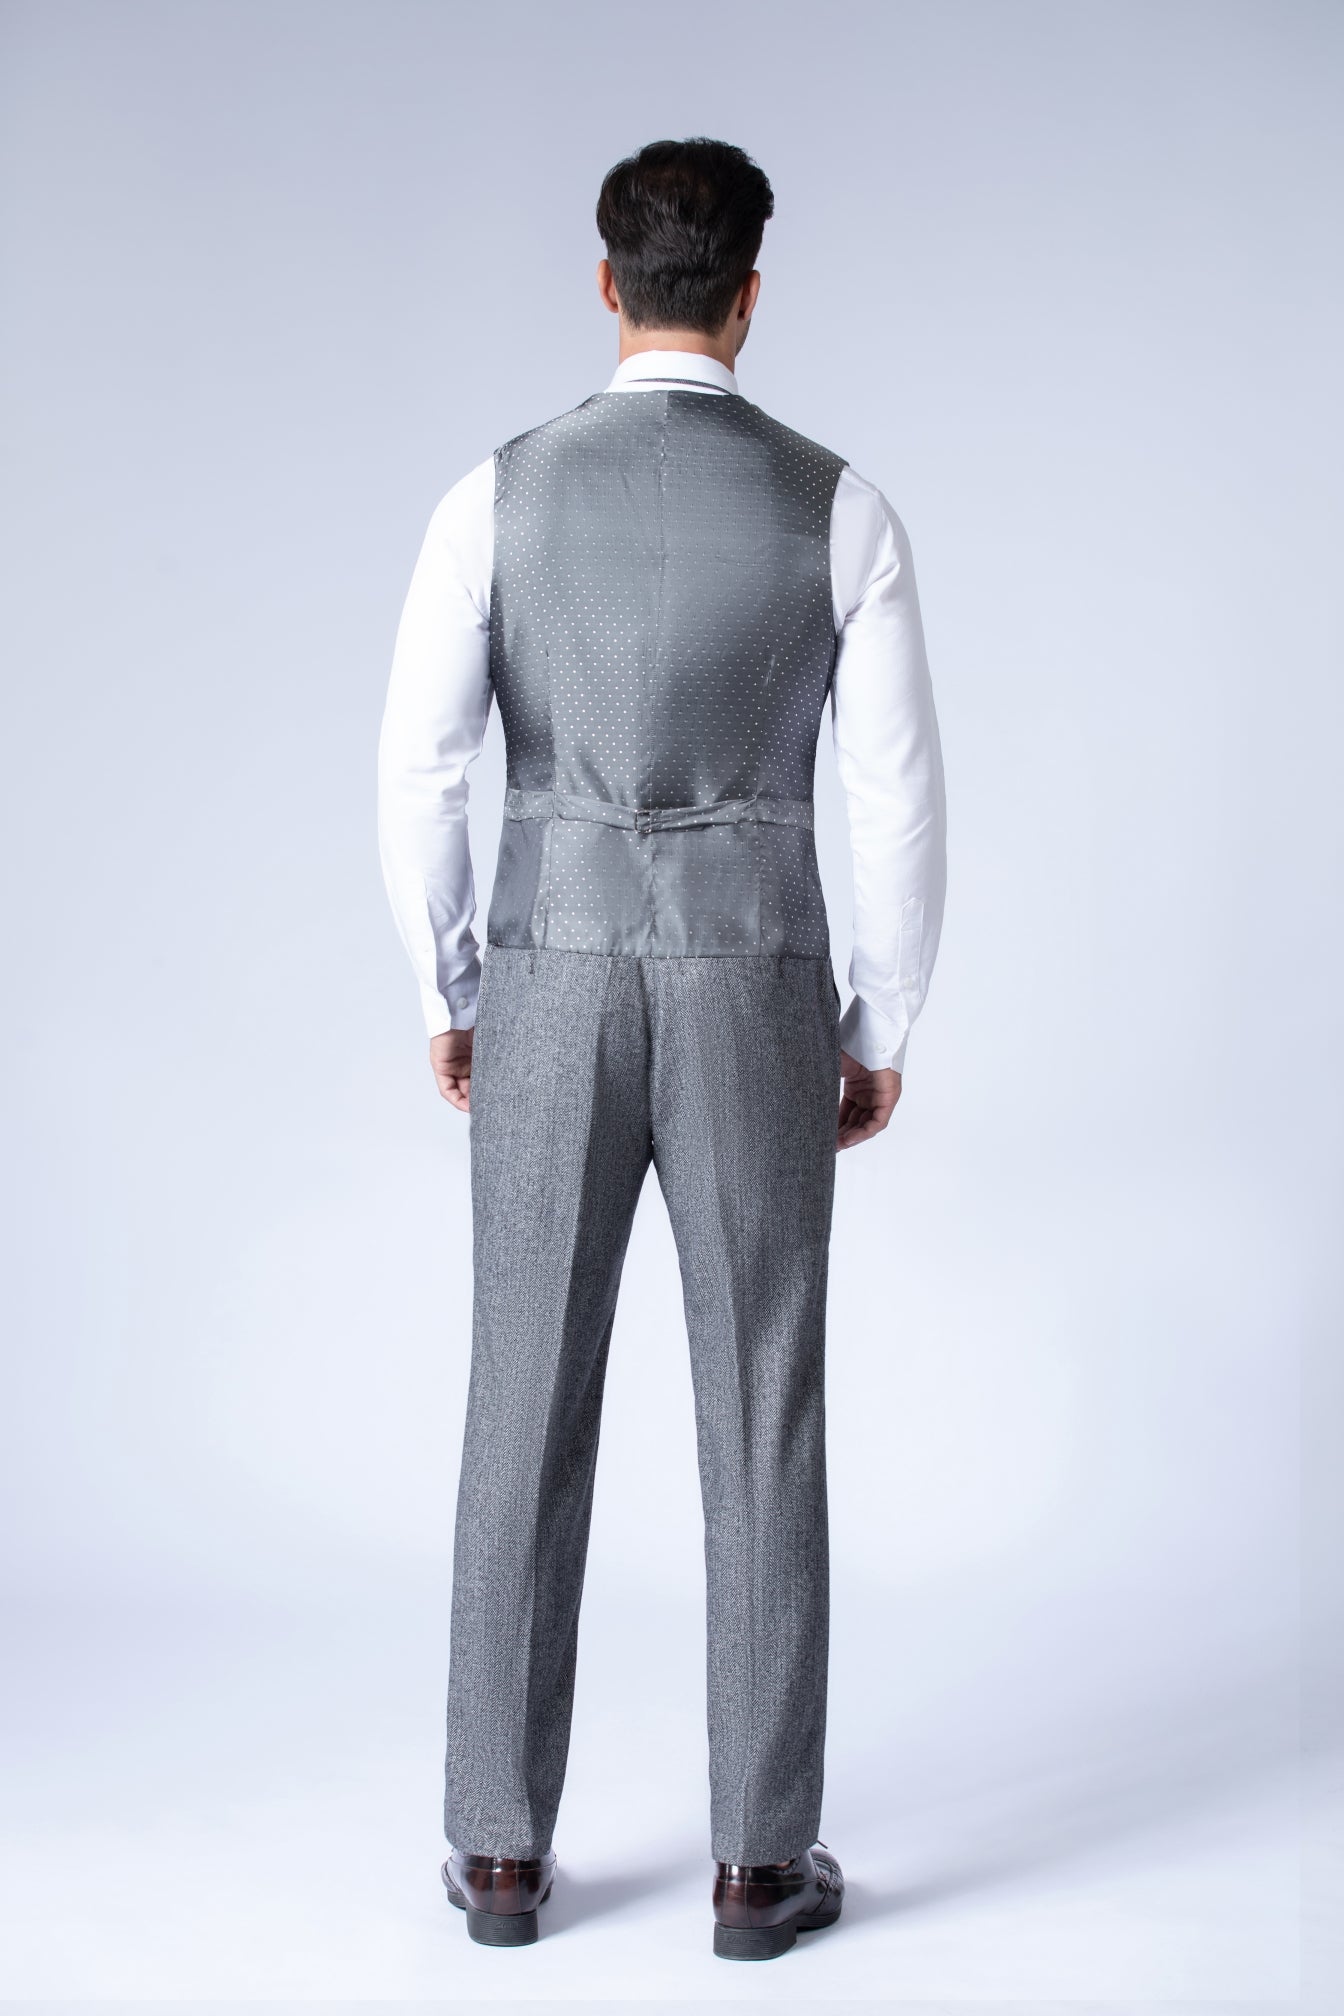 Classic Grey Herringbone Tweed Suit